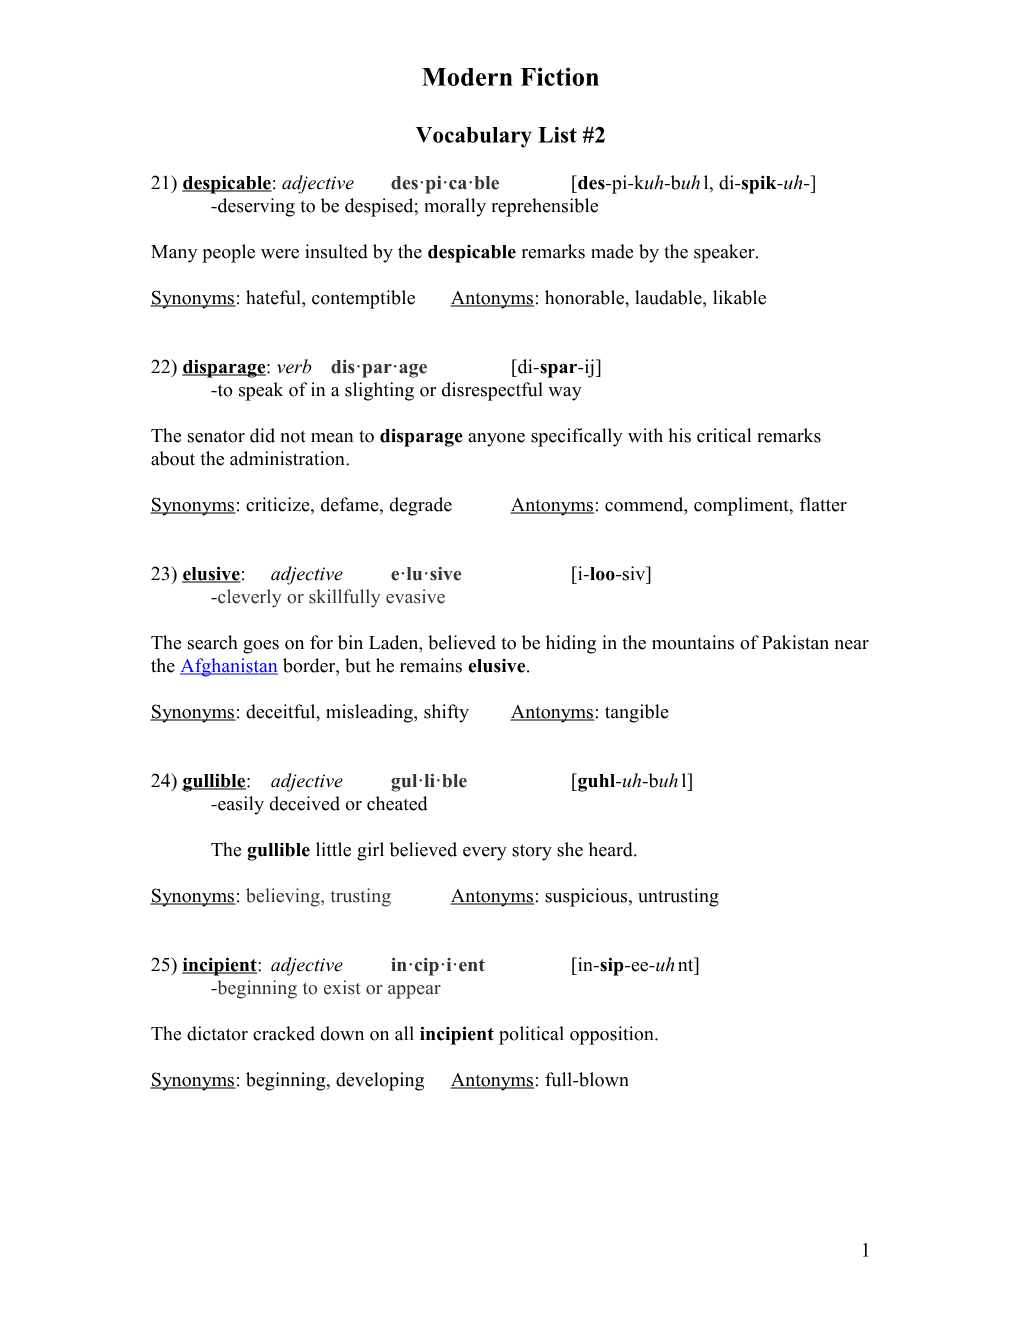 Vocabulary List #2